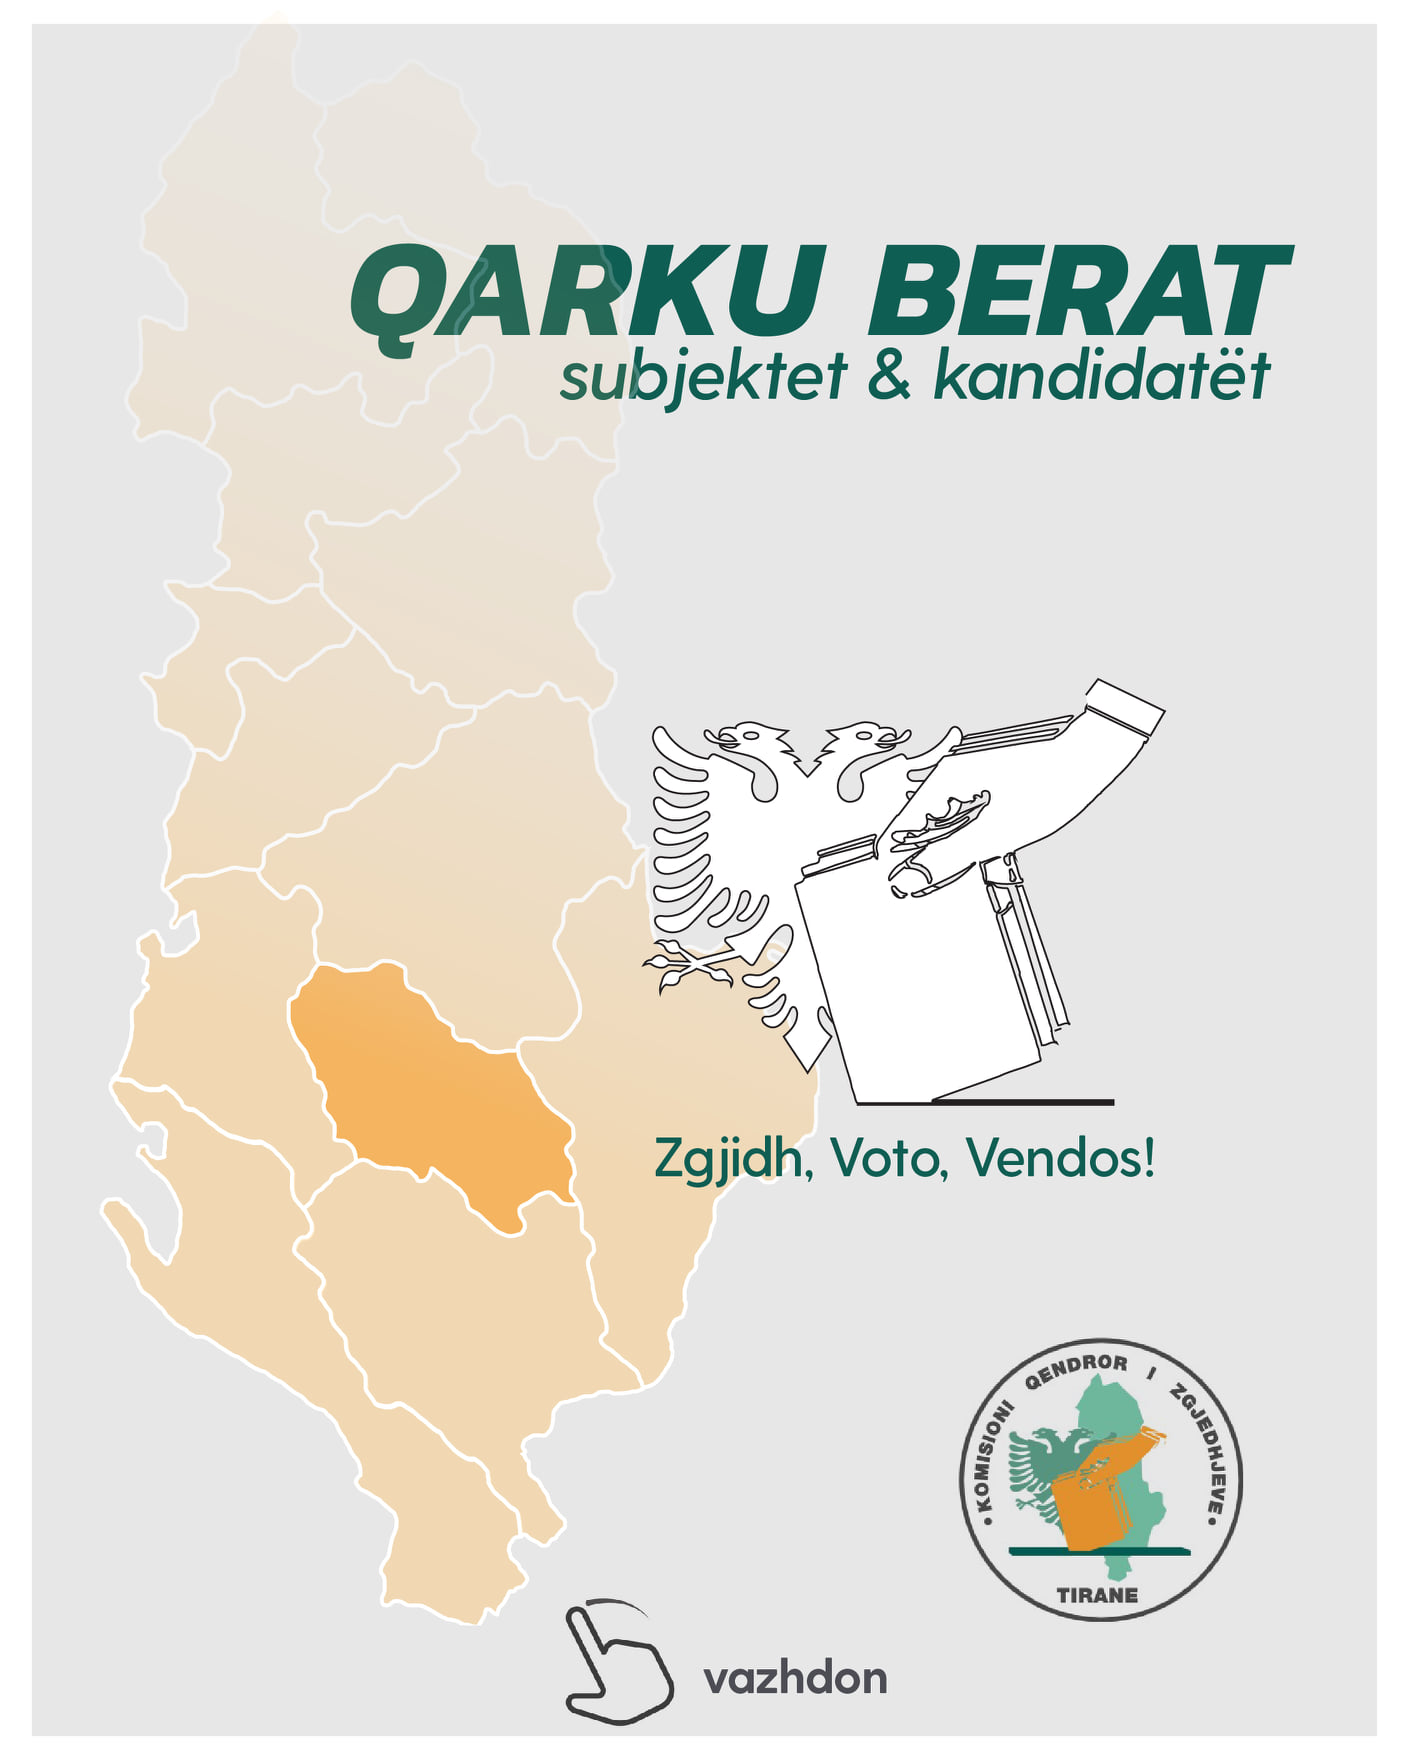 Berat District list of candidates